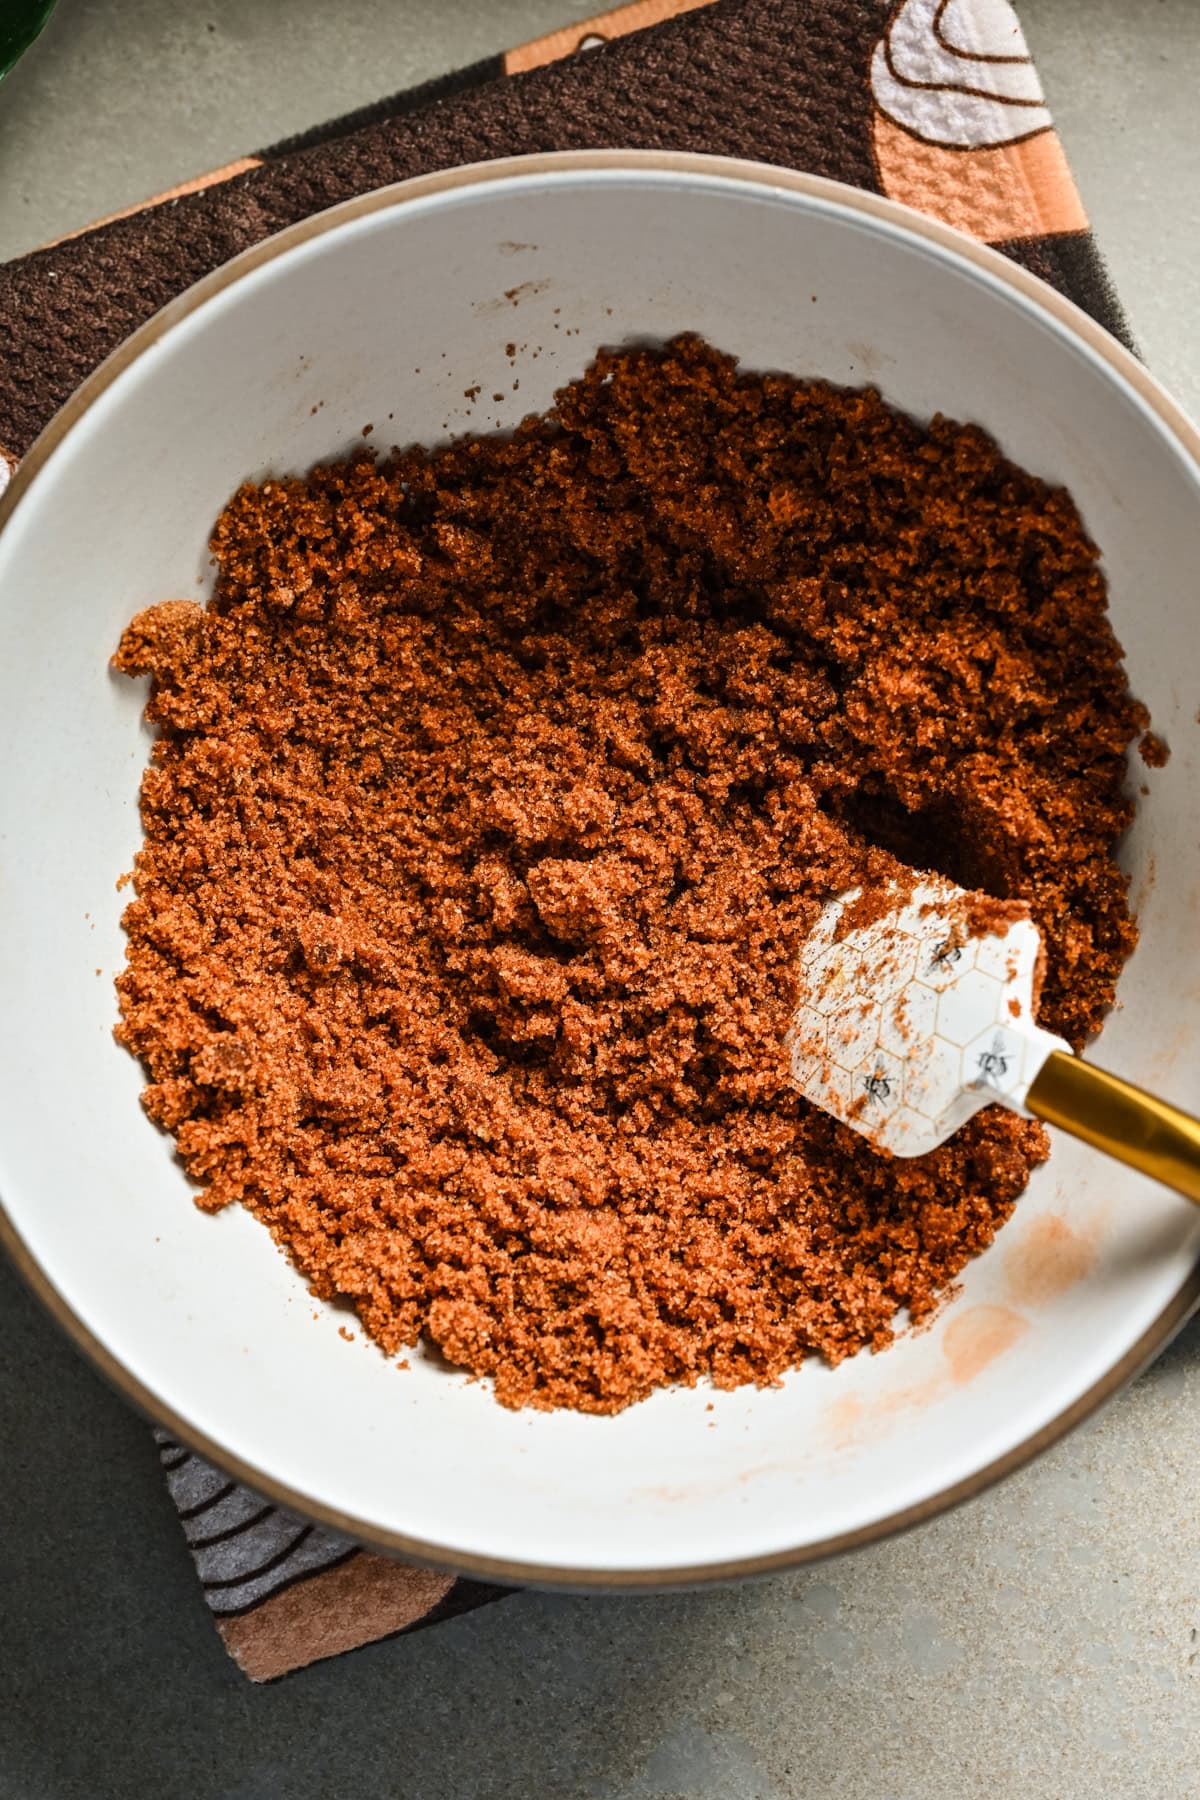 Brown sugar cinnamon filling in a white bowl.